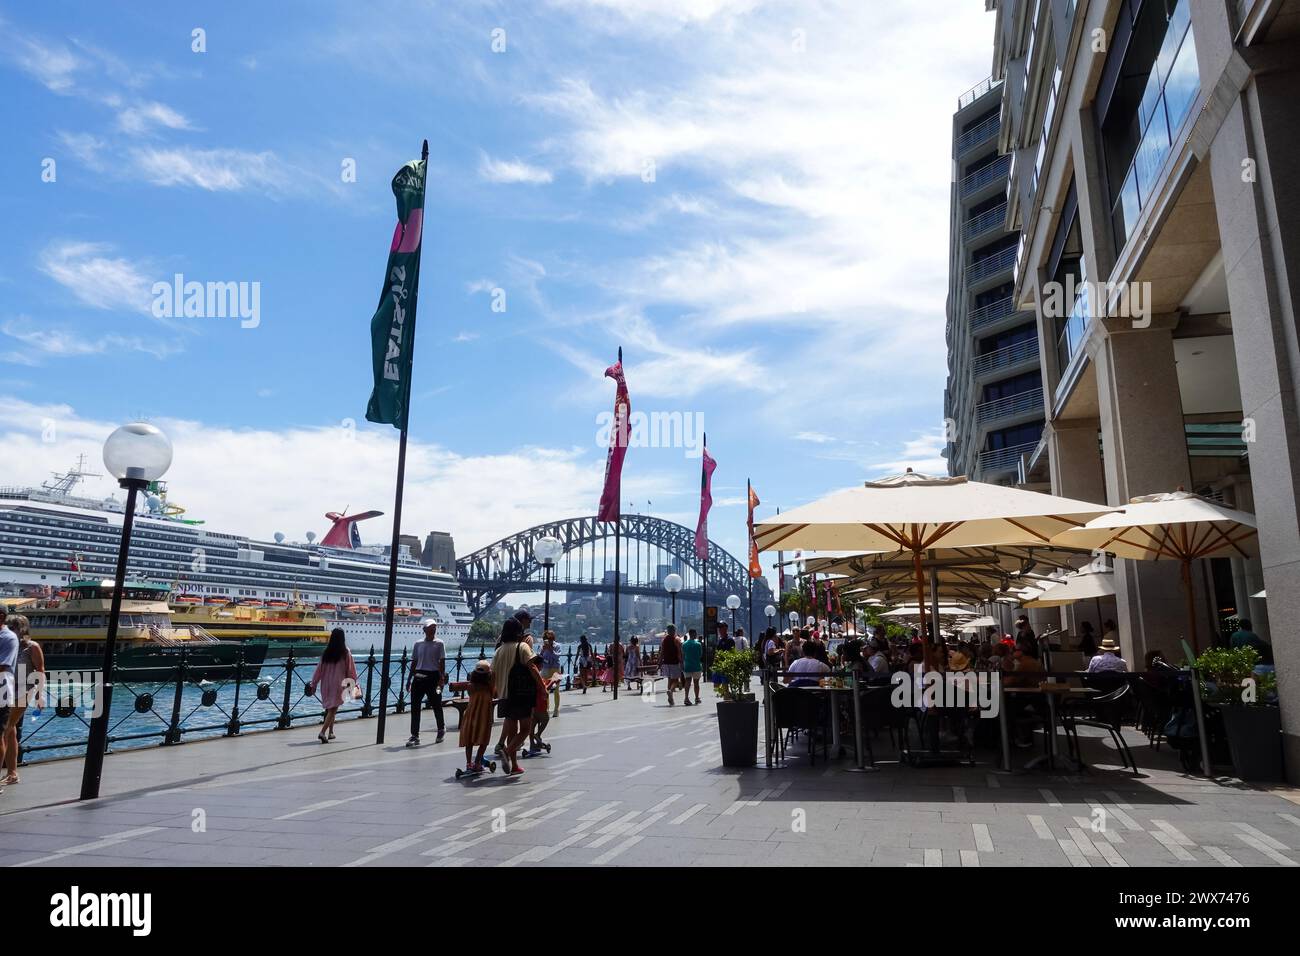 People walking around Circular Quay, Sydney, Australia on a sunny day Stock Photo